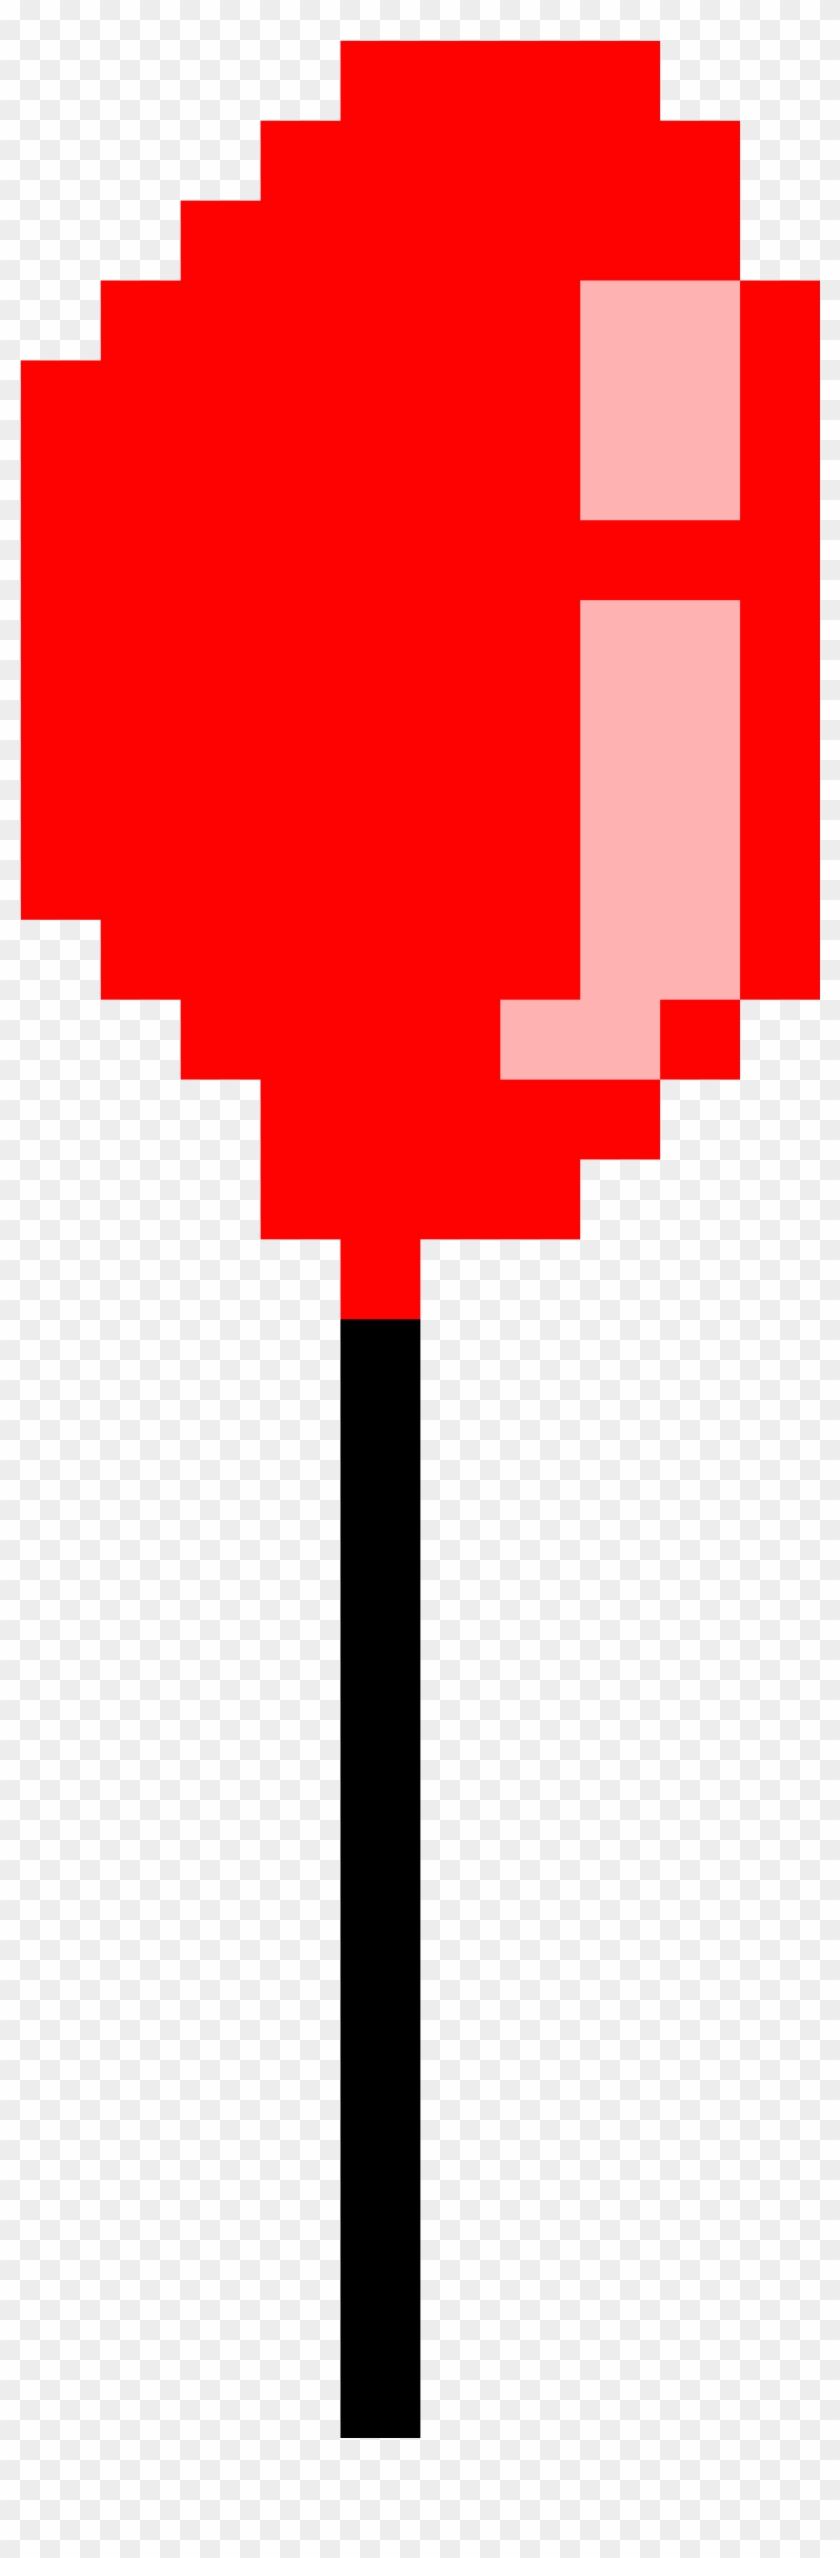 Red Balloon - Red Balloon Pixel #1323844